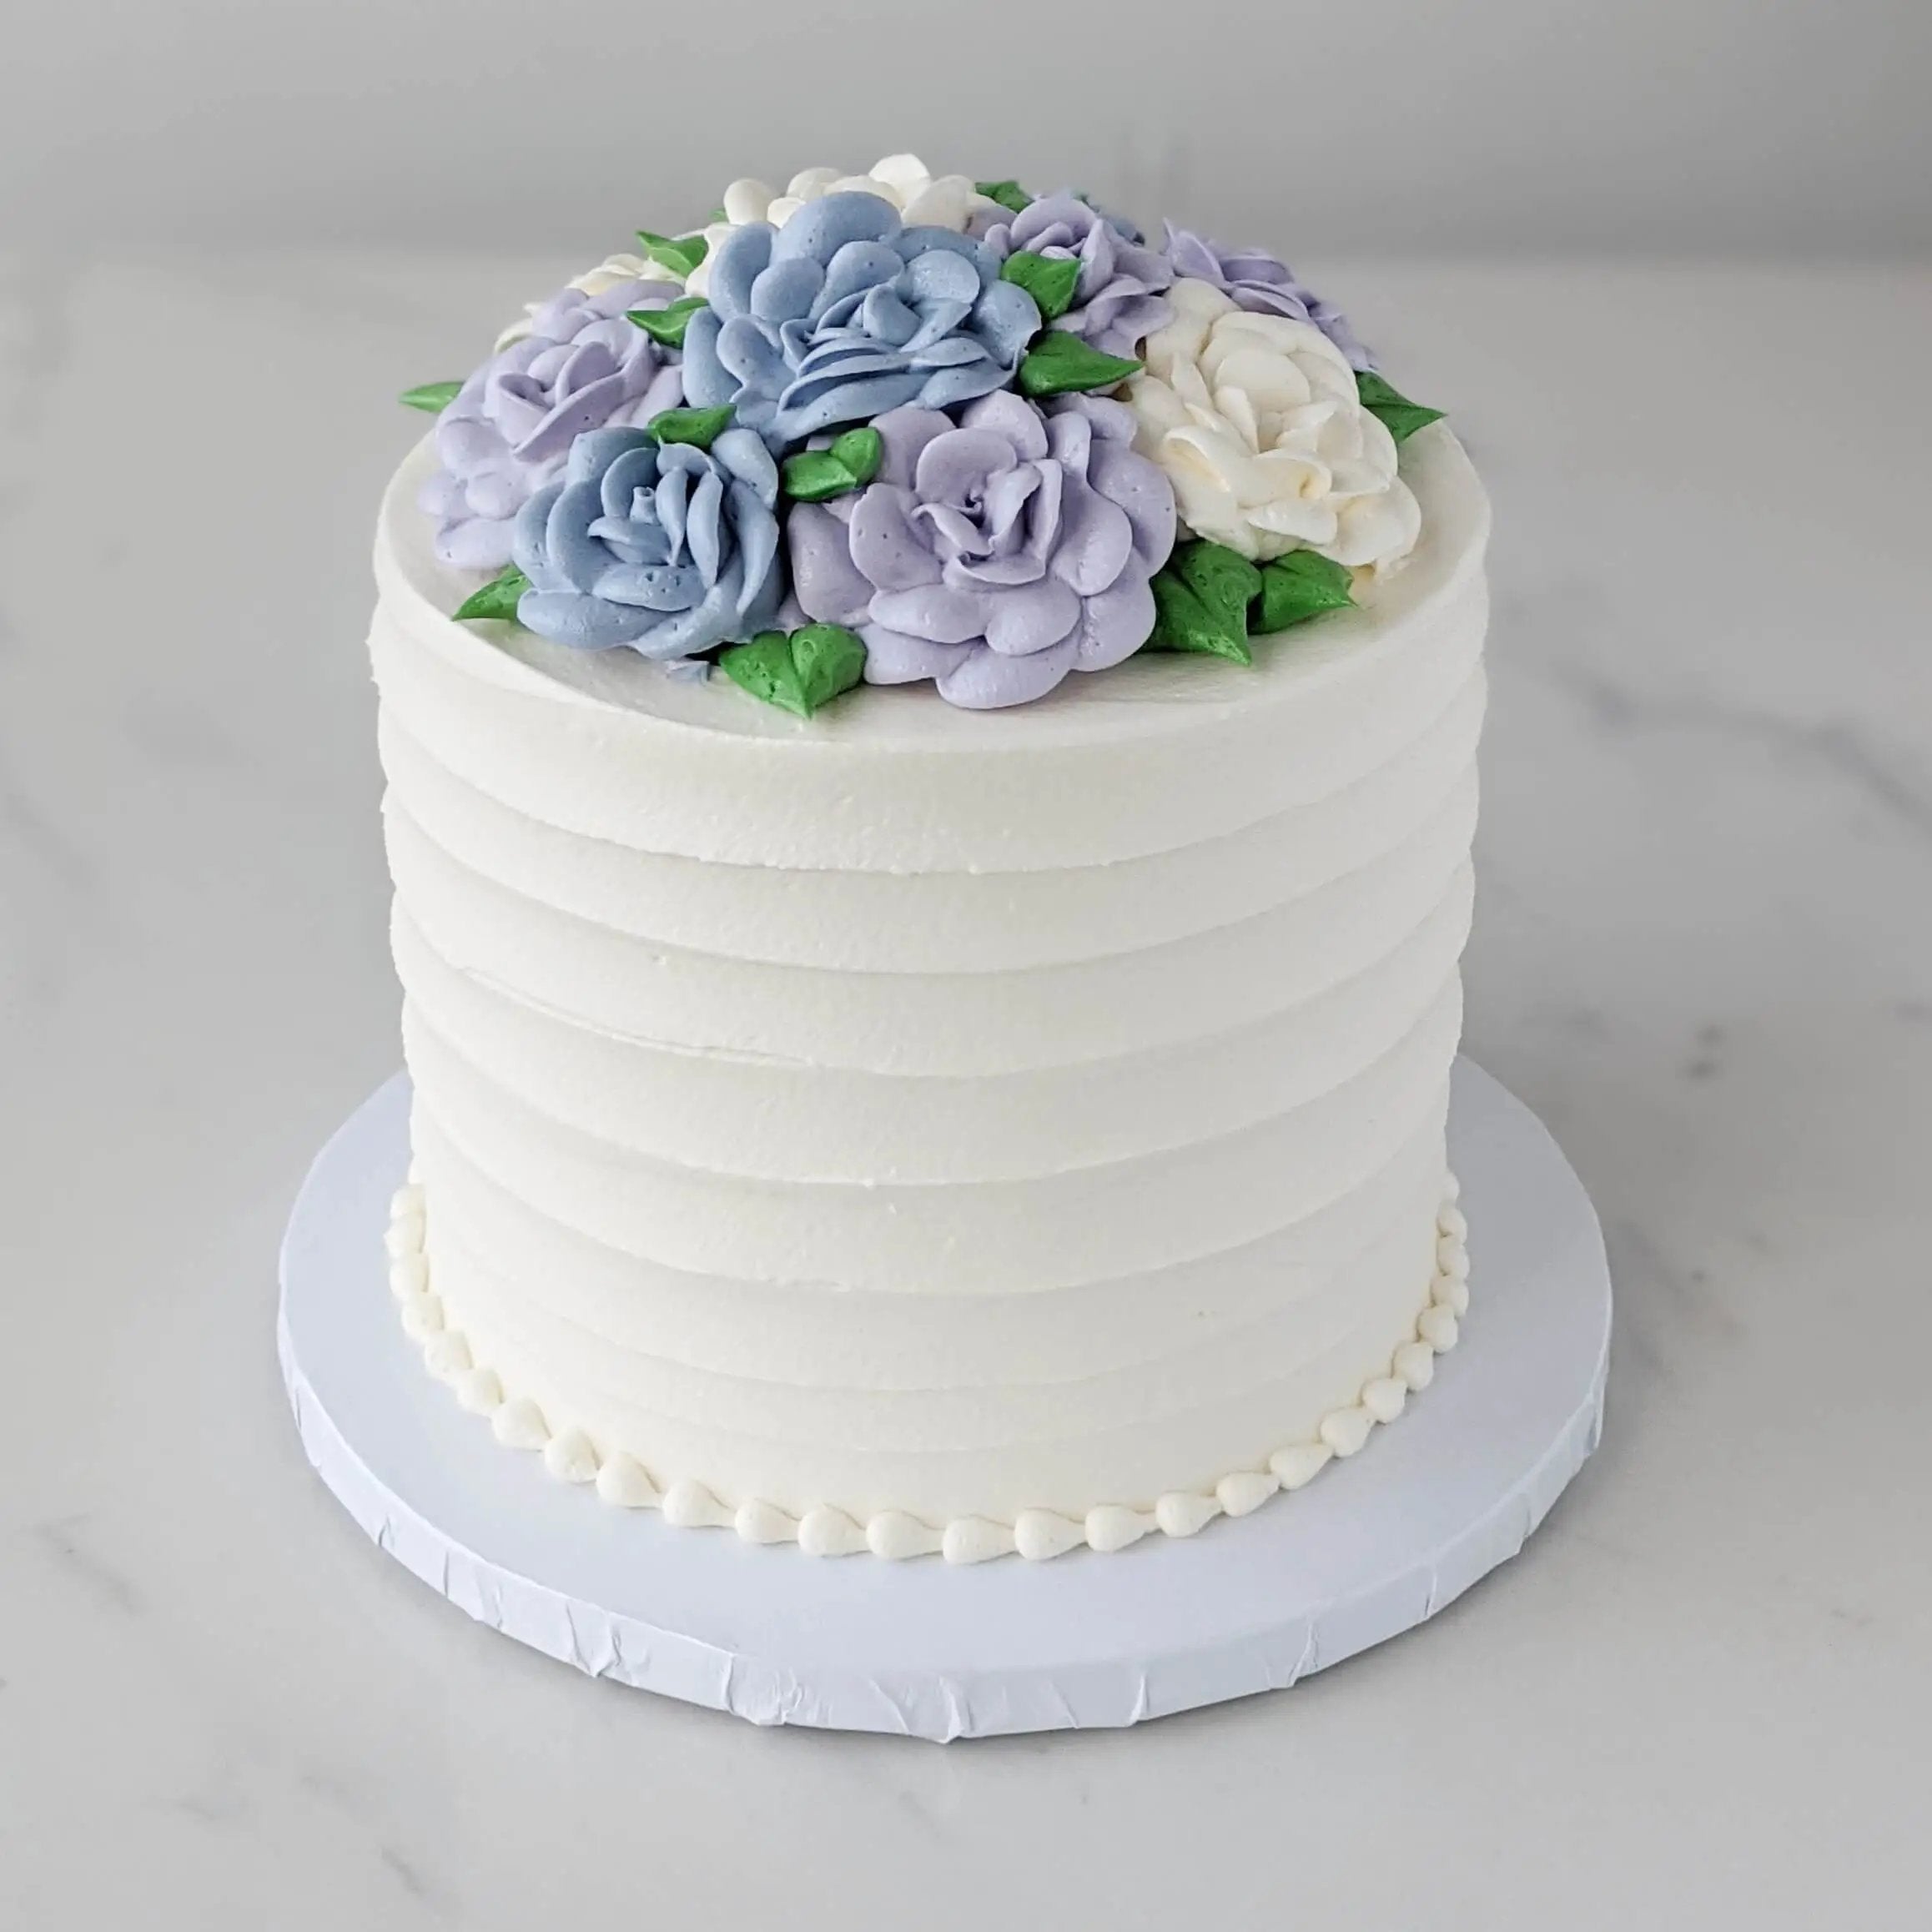 Floral Horizontal Rough Ice Cutting Cake - Celebrity Cake Studio